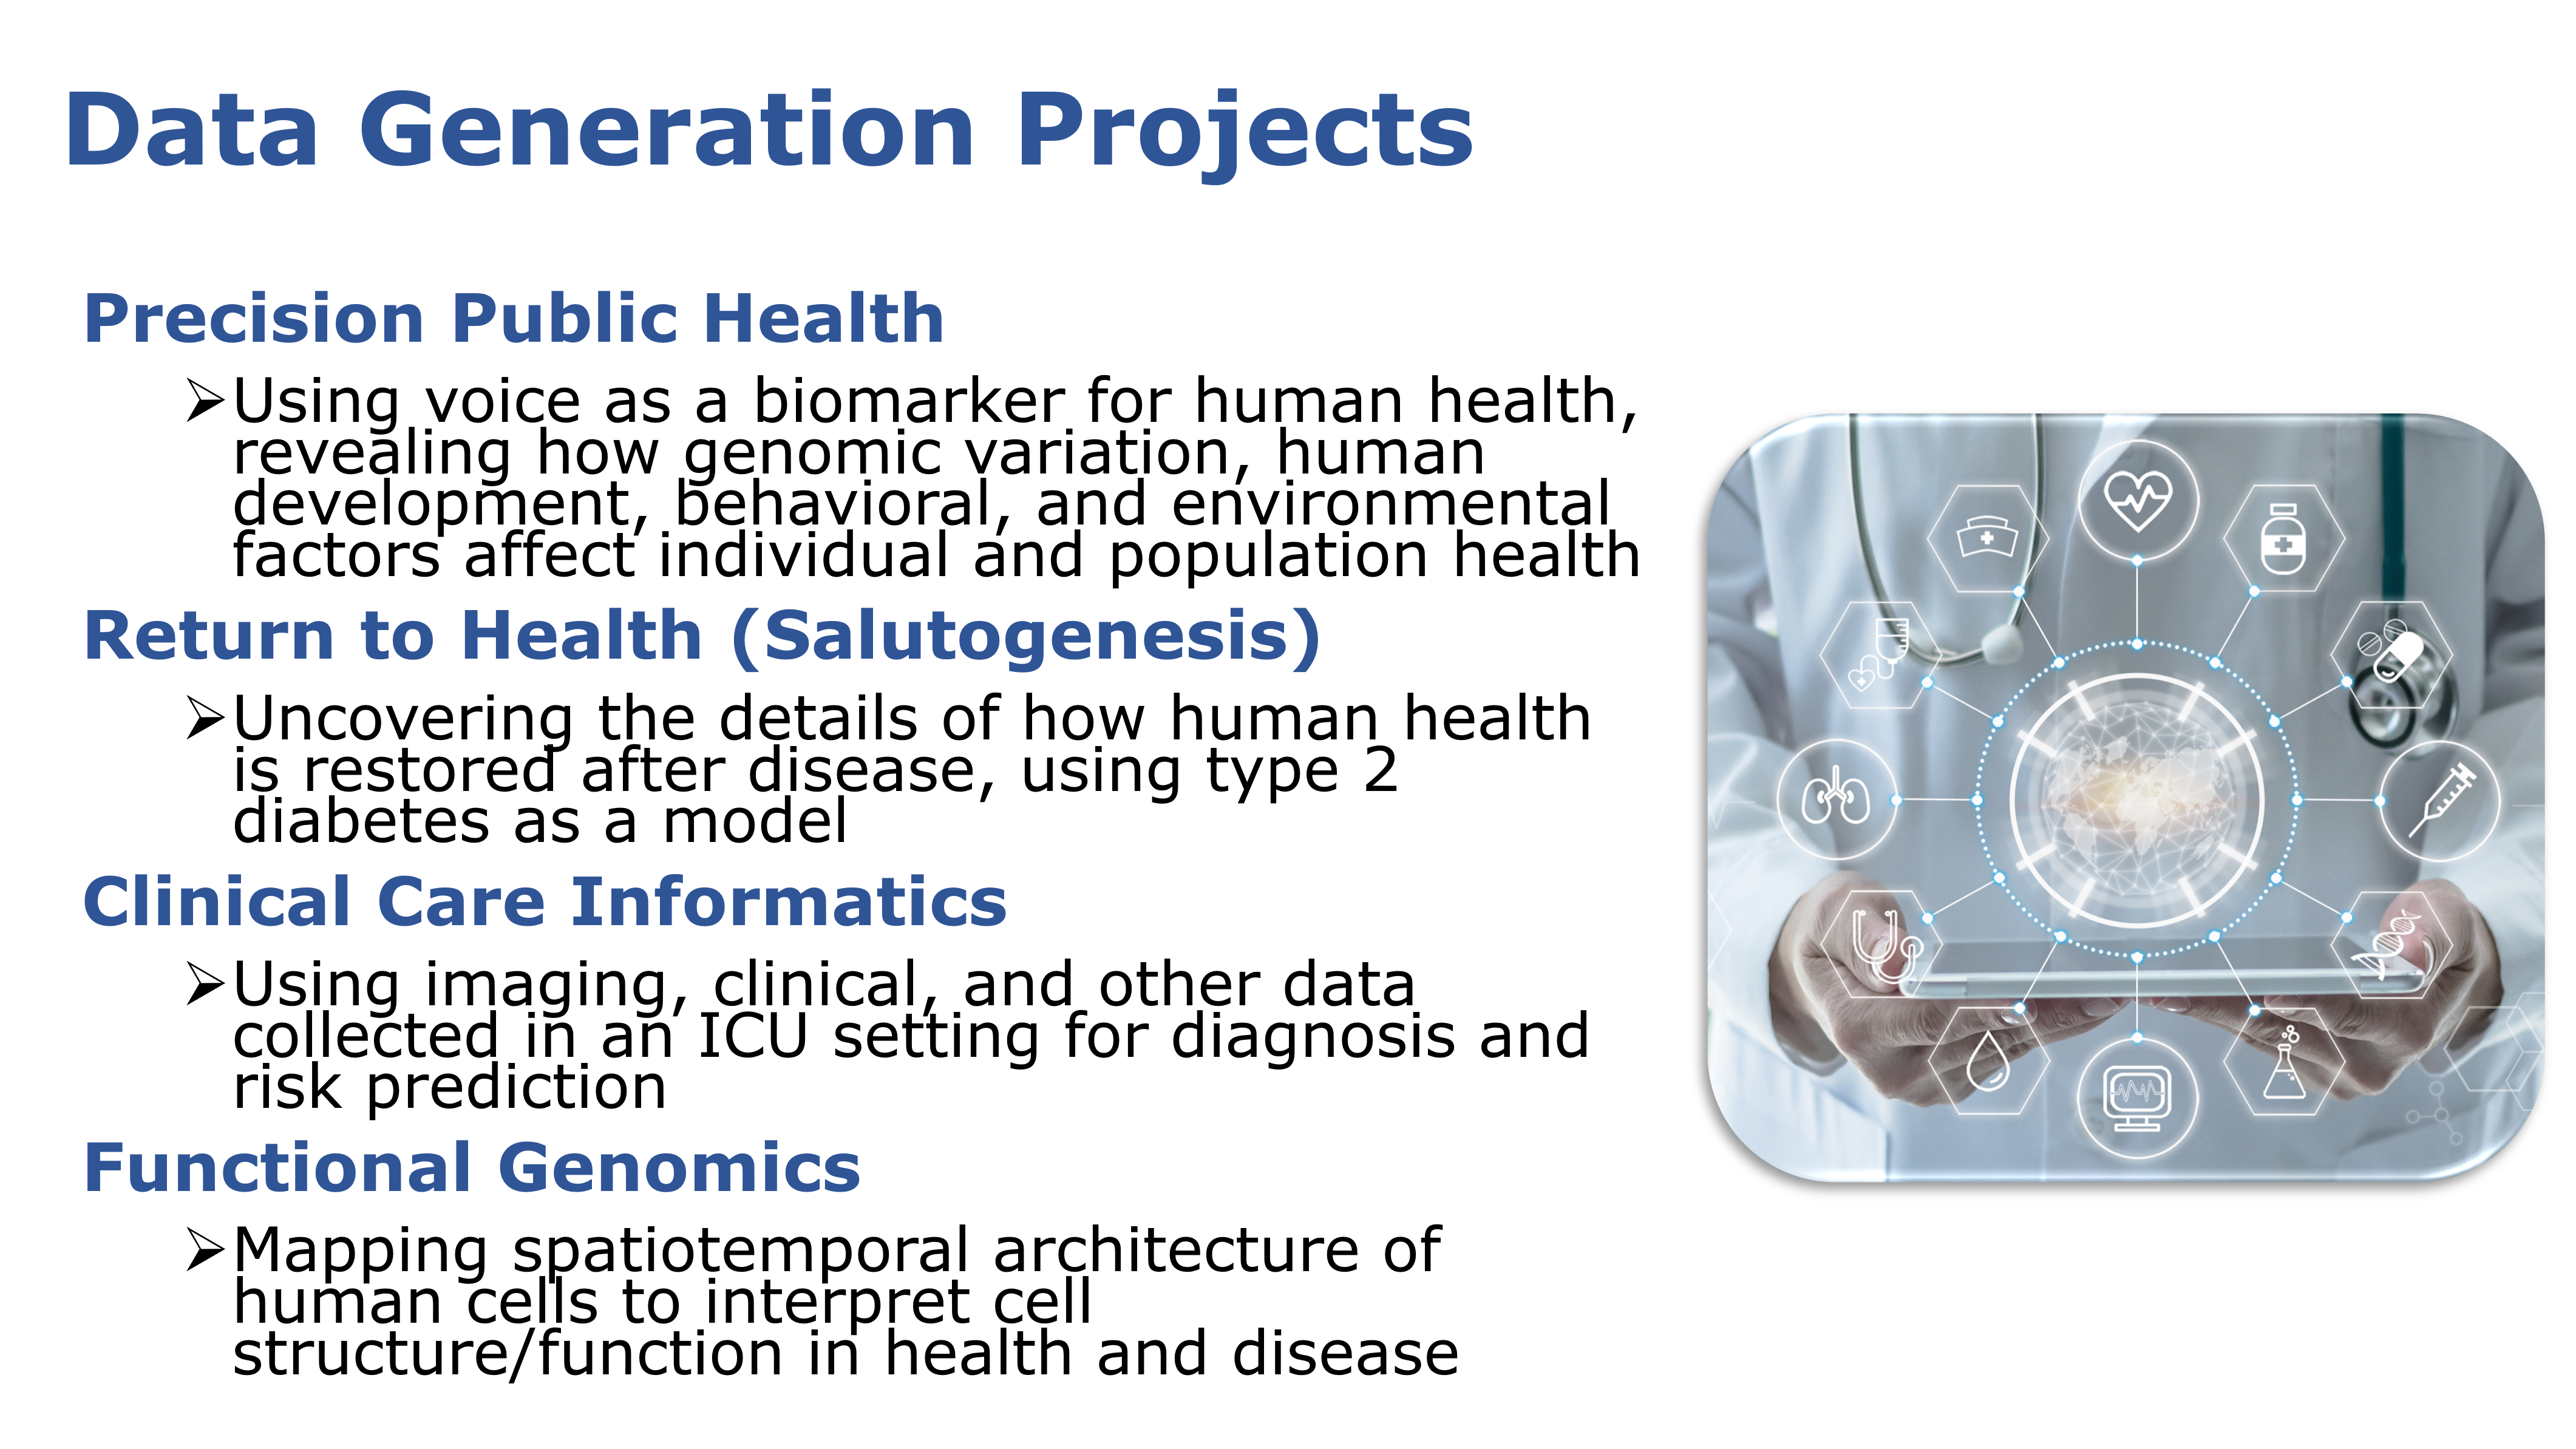 Description of Data Generation Projects (DGPs)